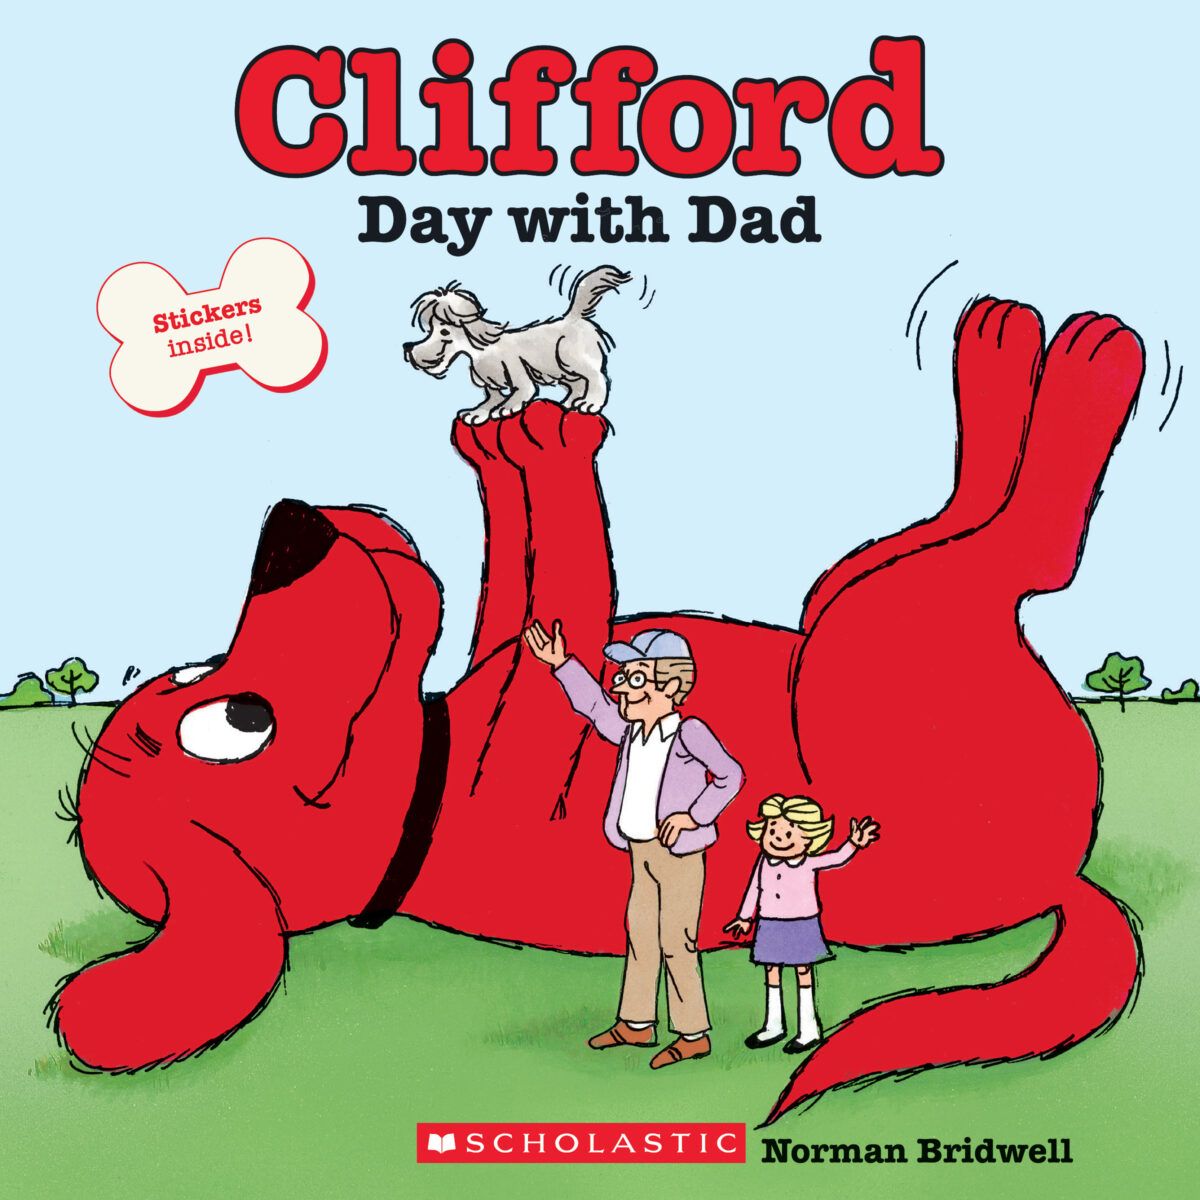 Daddy school. Norman Bridwell. Scholastic Inc. Clifford's Day with dad. "Dakota Clifford"+Oh.